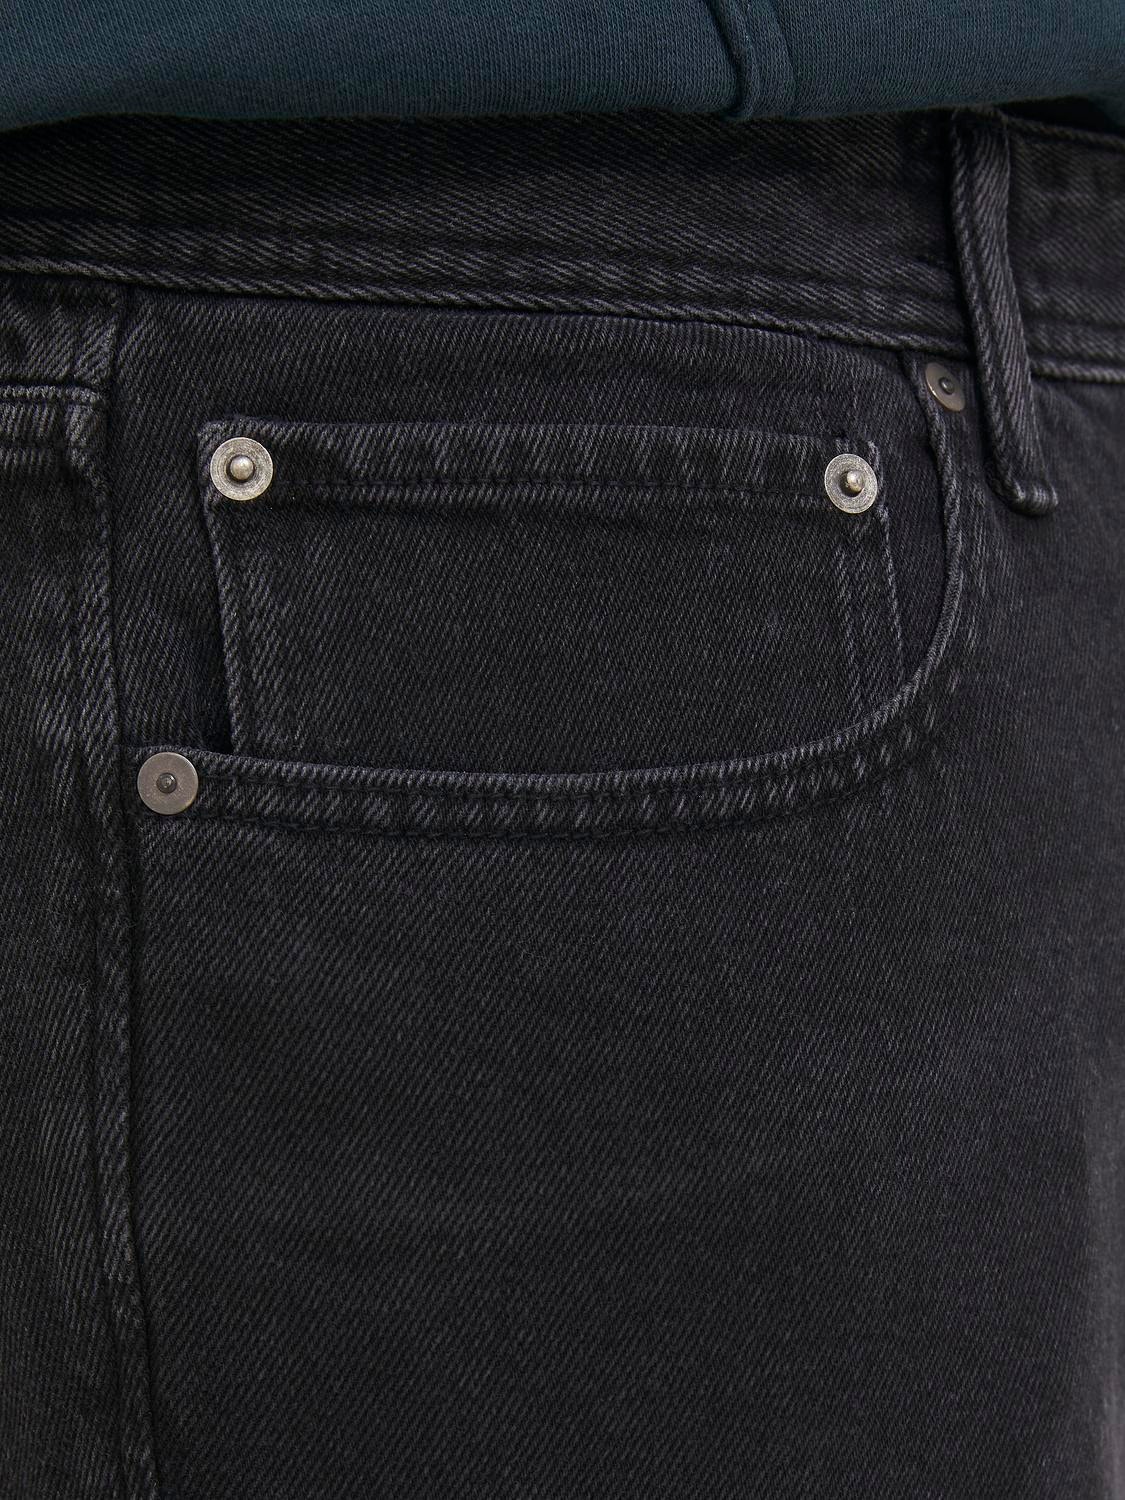 Jack & Jones Plus Size JJICHRIS JJORIGNIAL MF 912  PLS Relaxed Fit Jeans -Black Denim - 12243563